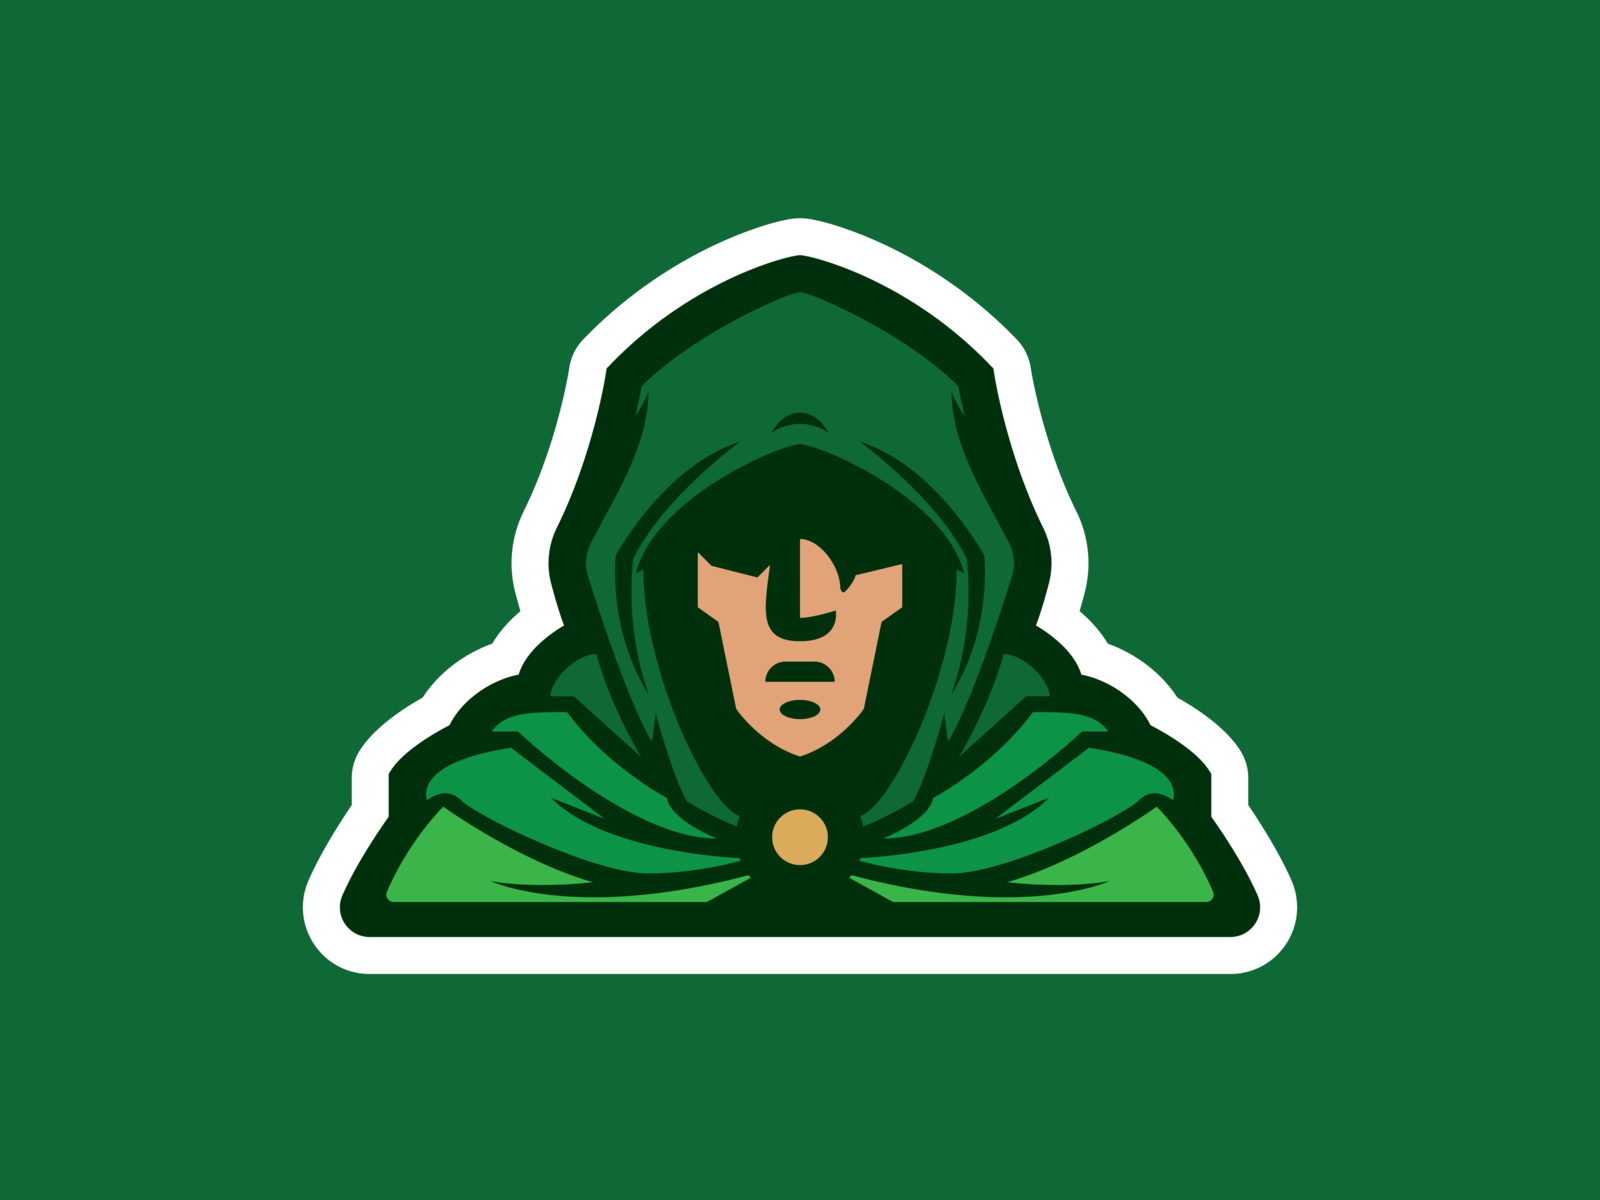 Hooded Man Mascot by Daniel Margheim on Dribbble